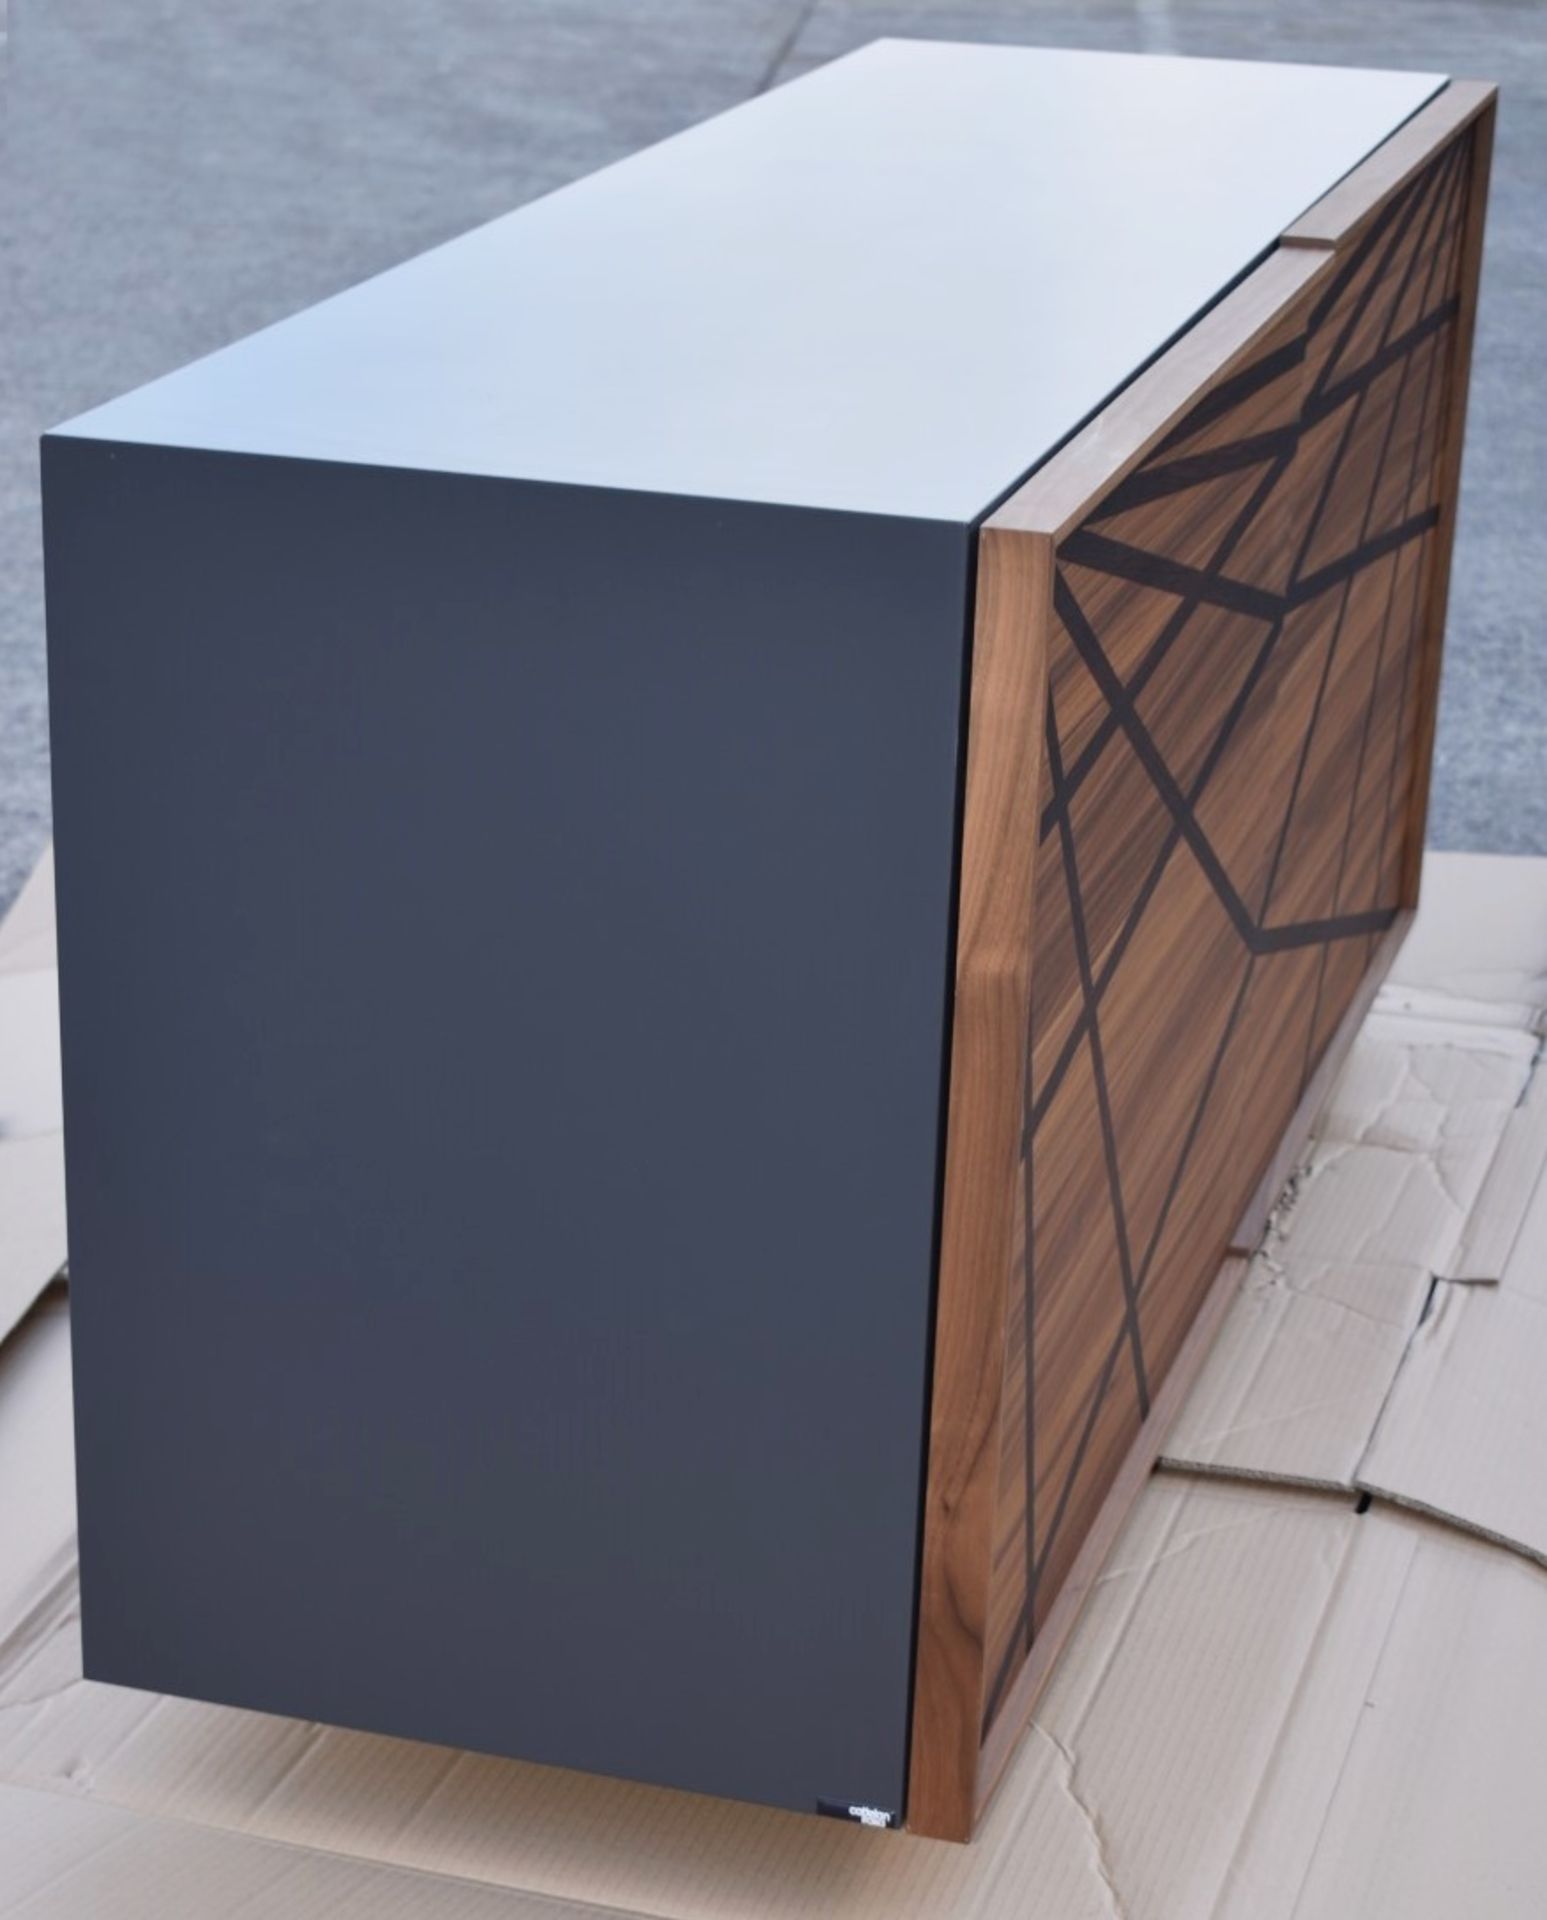 1 x CATTELAN ITALIA 'Webber' Designer Sideboard in Grey with Canaletto Walnut Doors - RRP £2,000 - Image 13 of 16